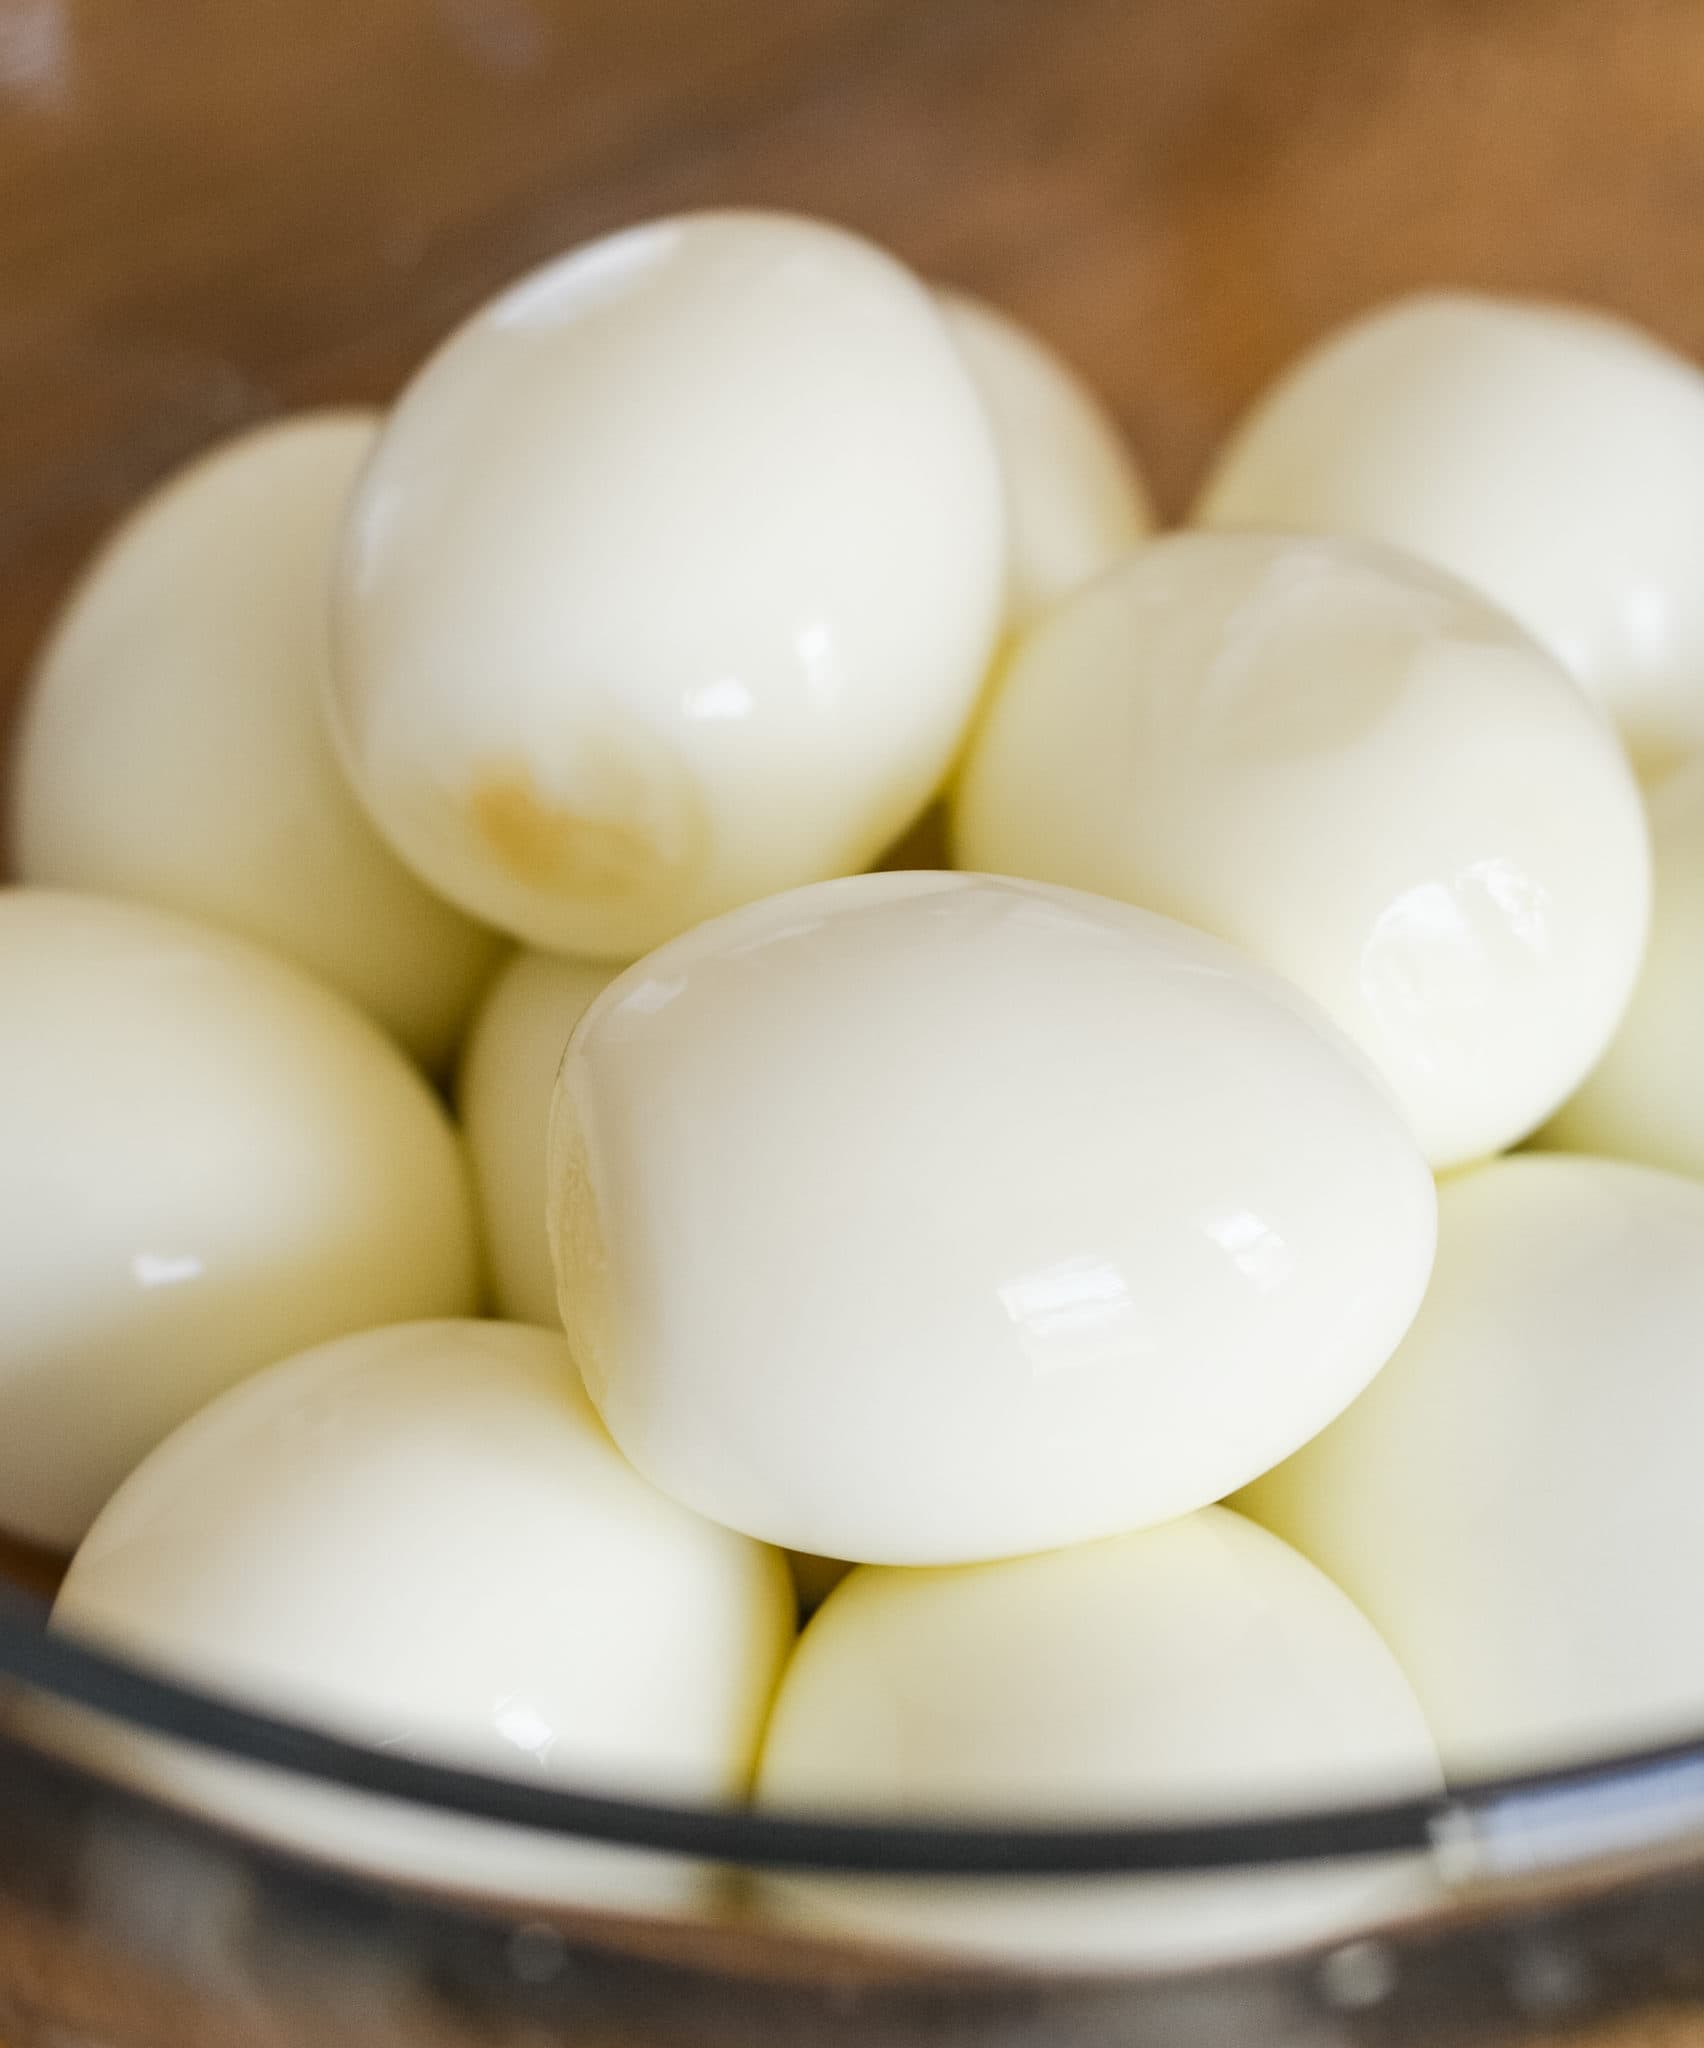 https://www.mommyhatescooking.com/wp-content/uploads/2020/01/ninja-foodi-hard-boiled-eggs-3-scaled.jpg